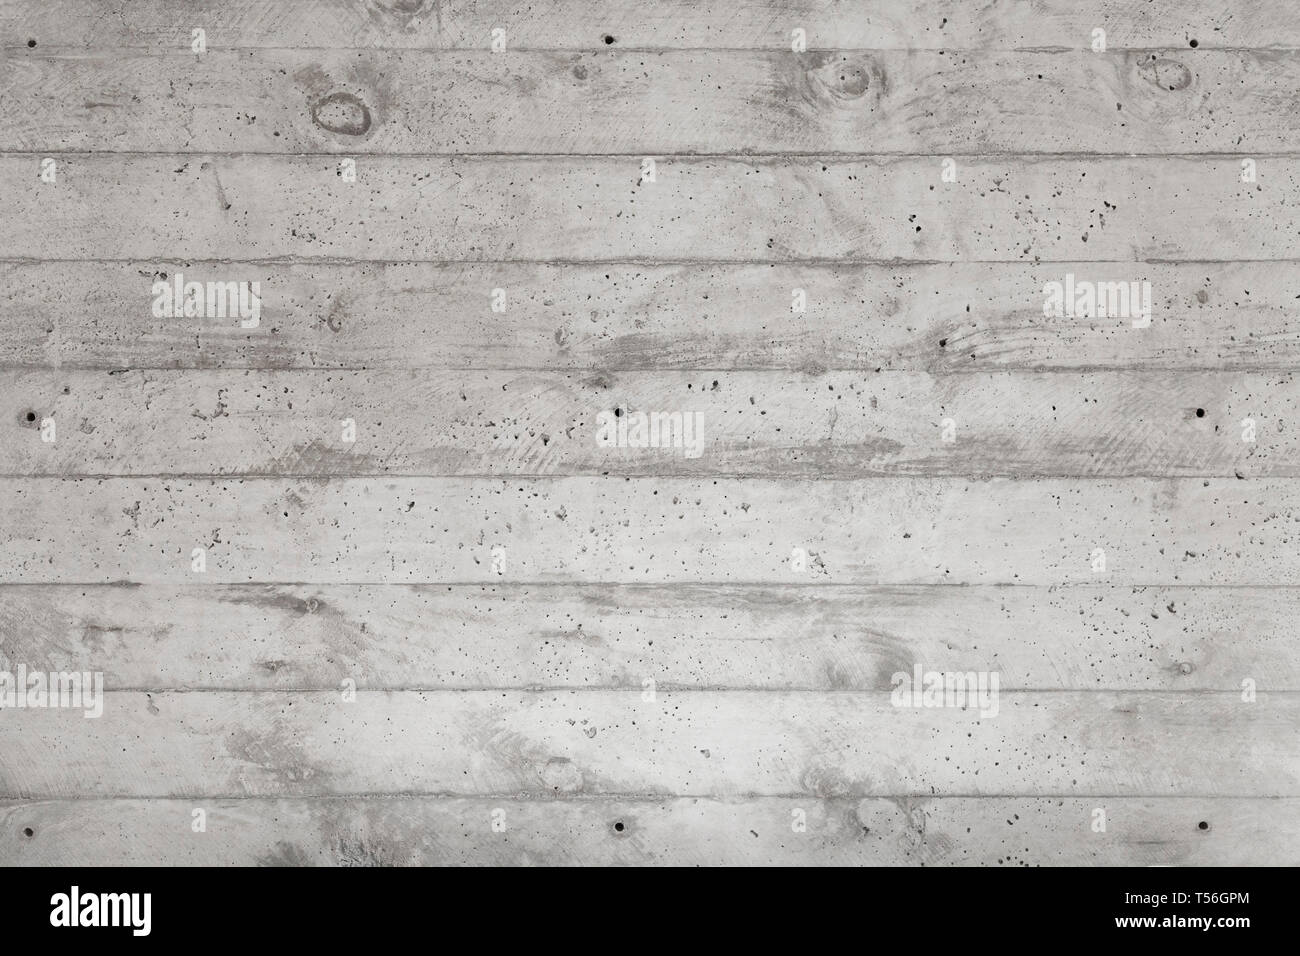 Rough grunge interior concrete wall background Stock Photo